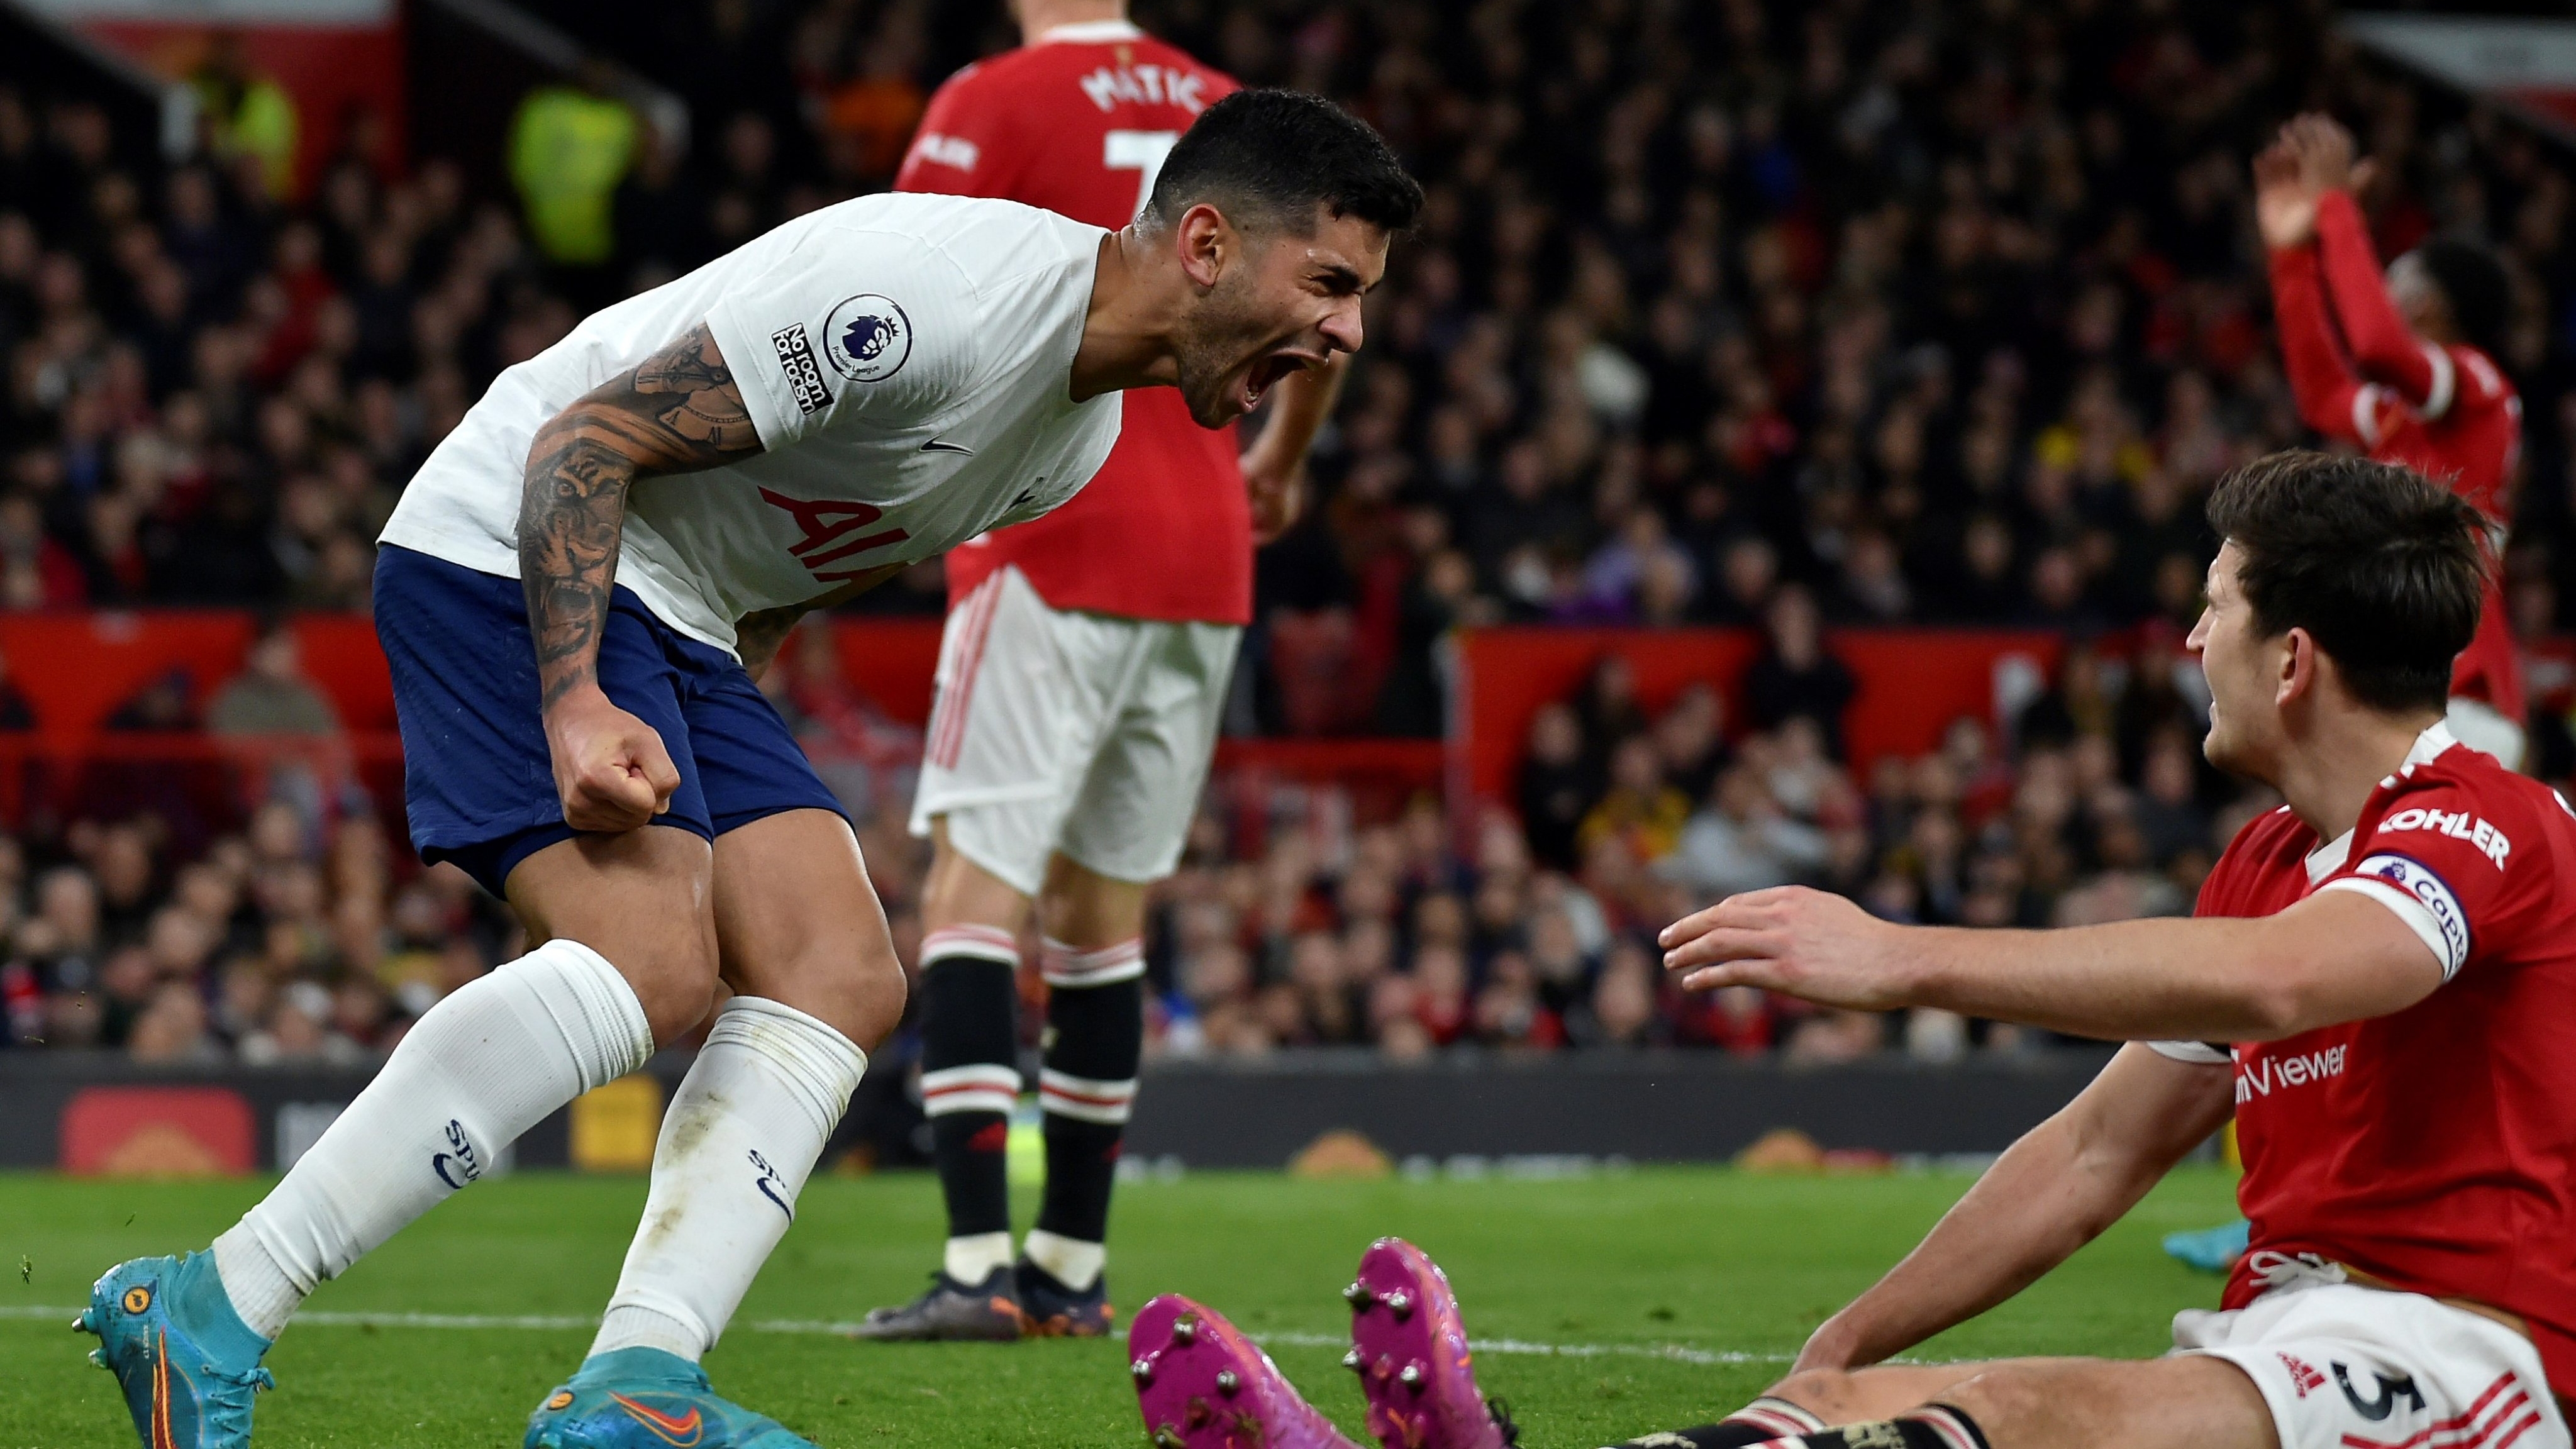 Polémico festejo del Cuti Romero: le gritó el gol en la cara a Maguire tras el empate de Tottenham ante Manchester United